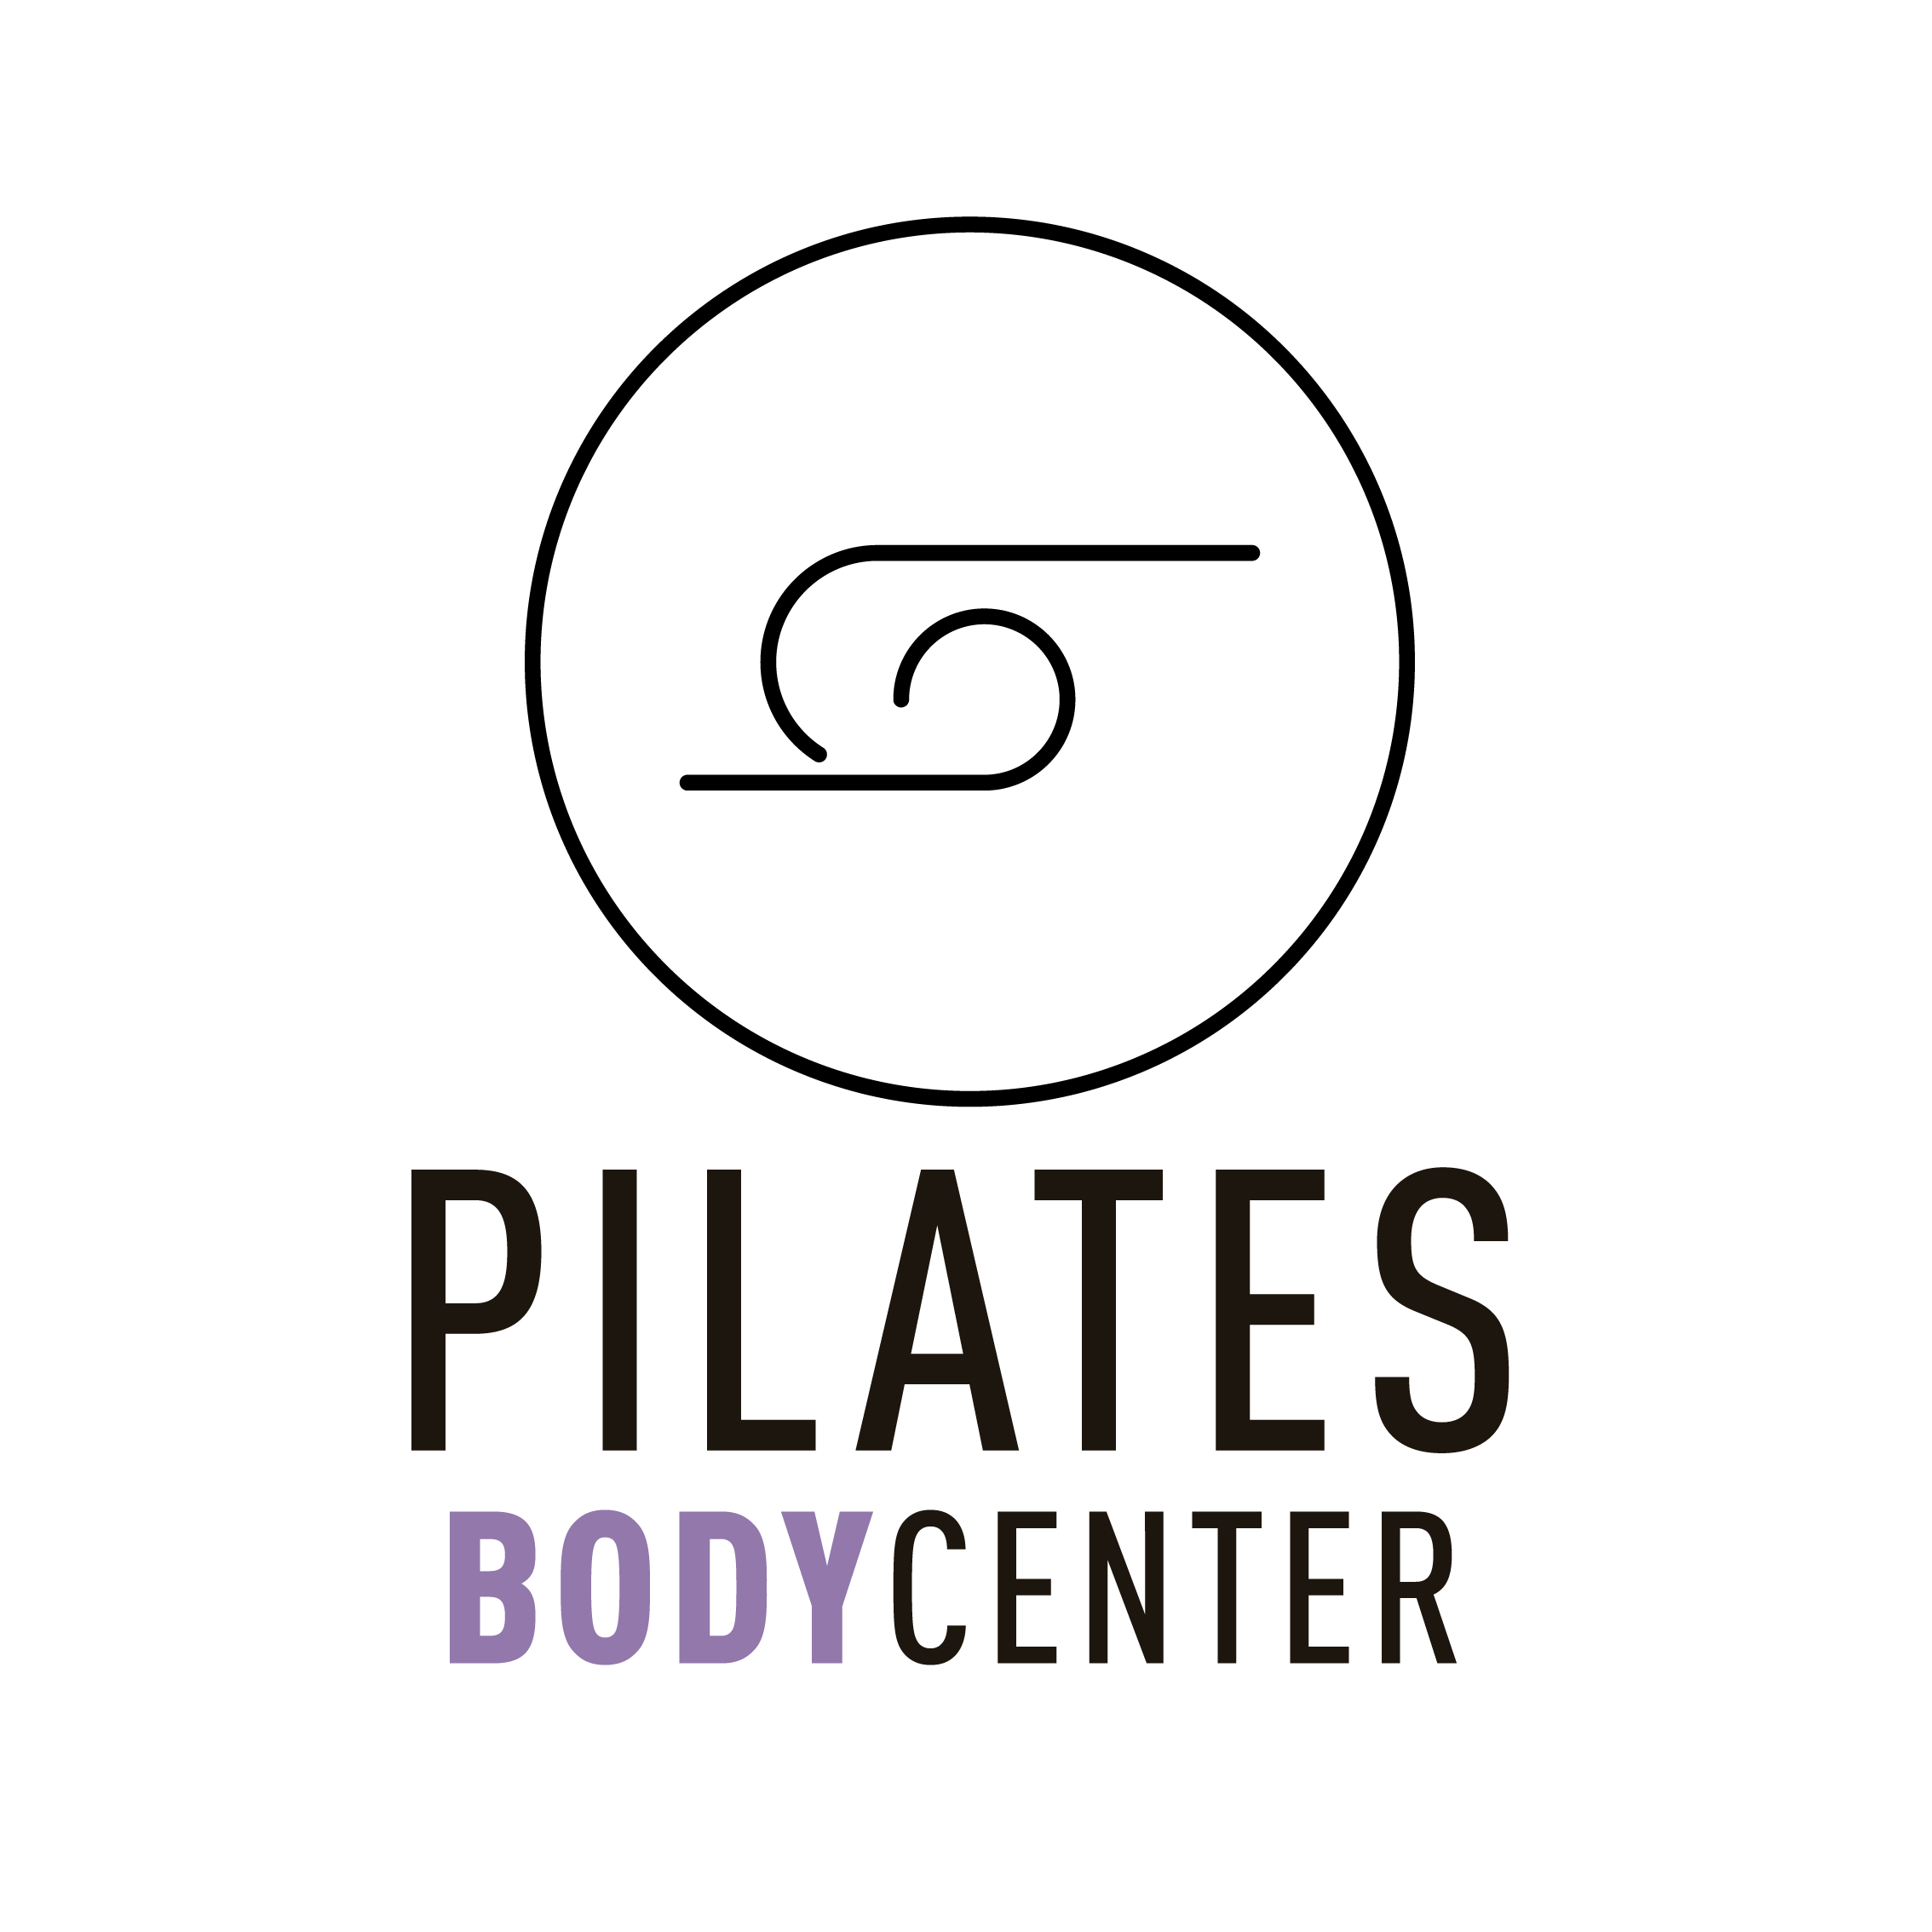 Pilates Body Center